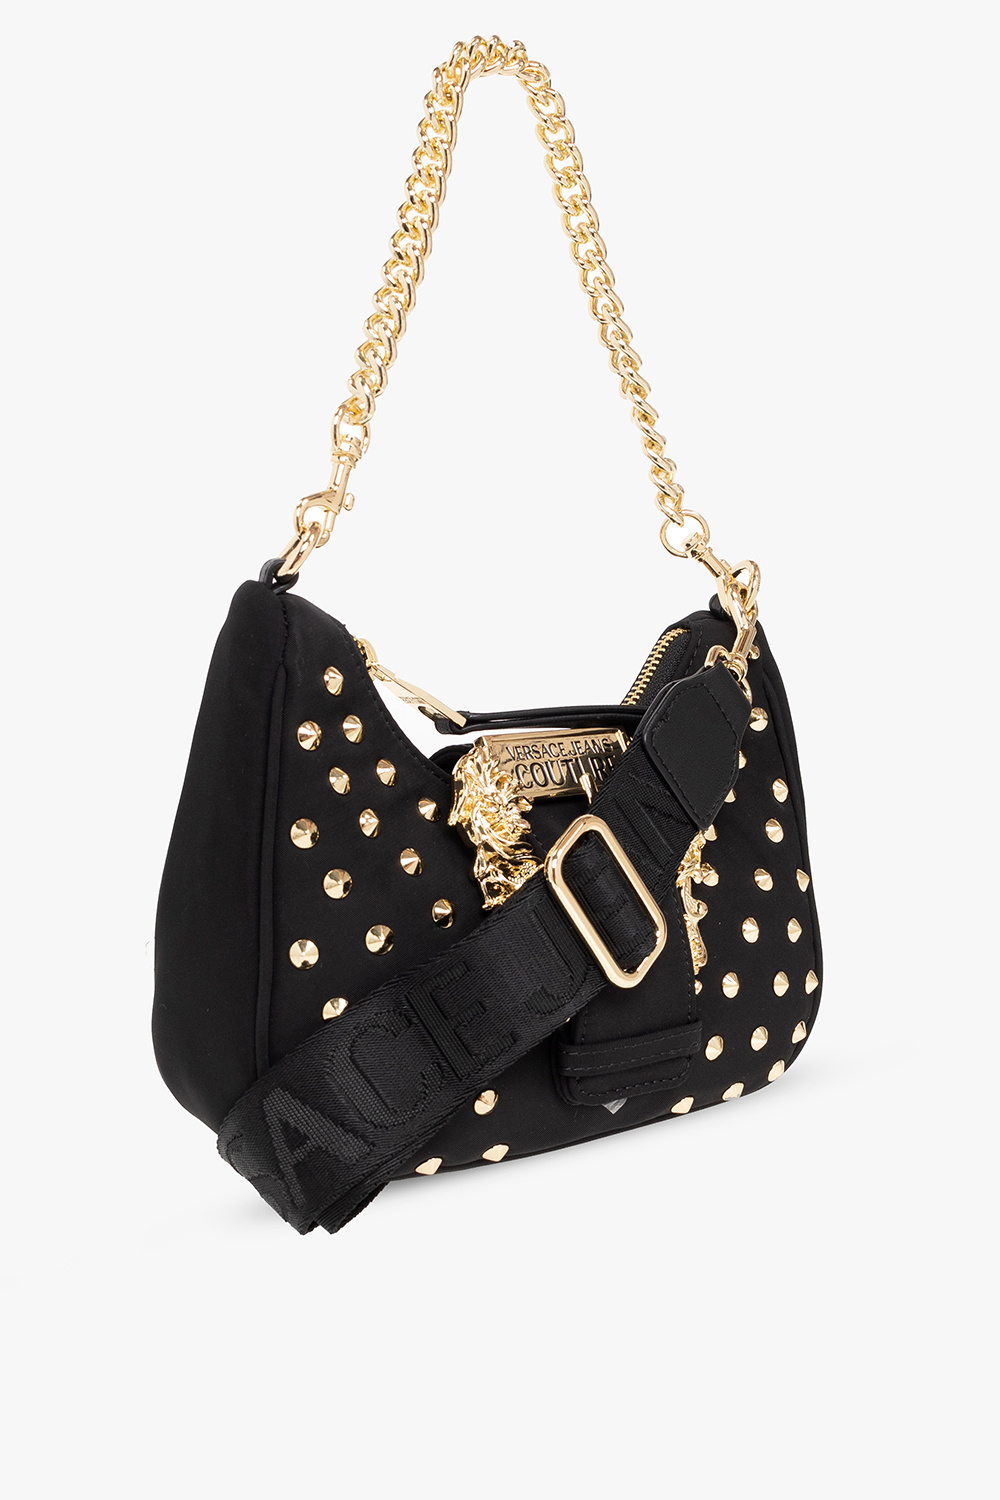 Versace Jeans Couture - Logo-print Cylinder Bag, Designer Travel Bag Duffle  $375